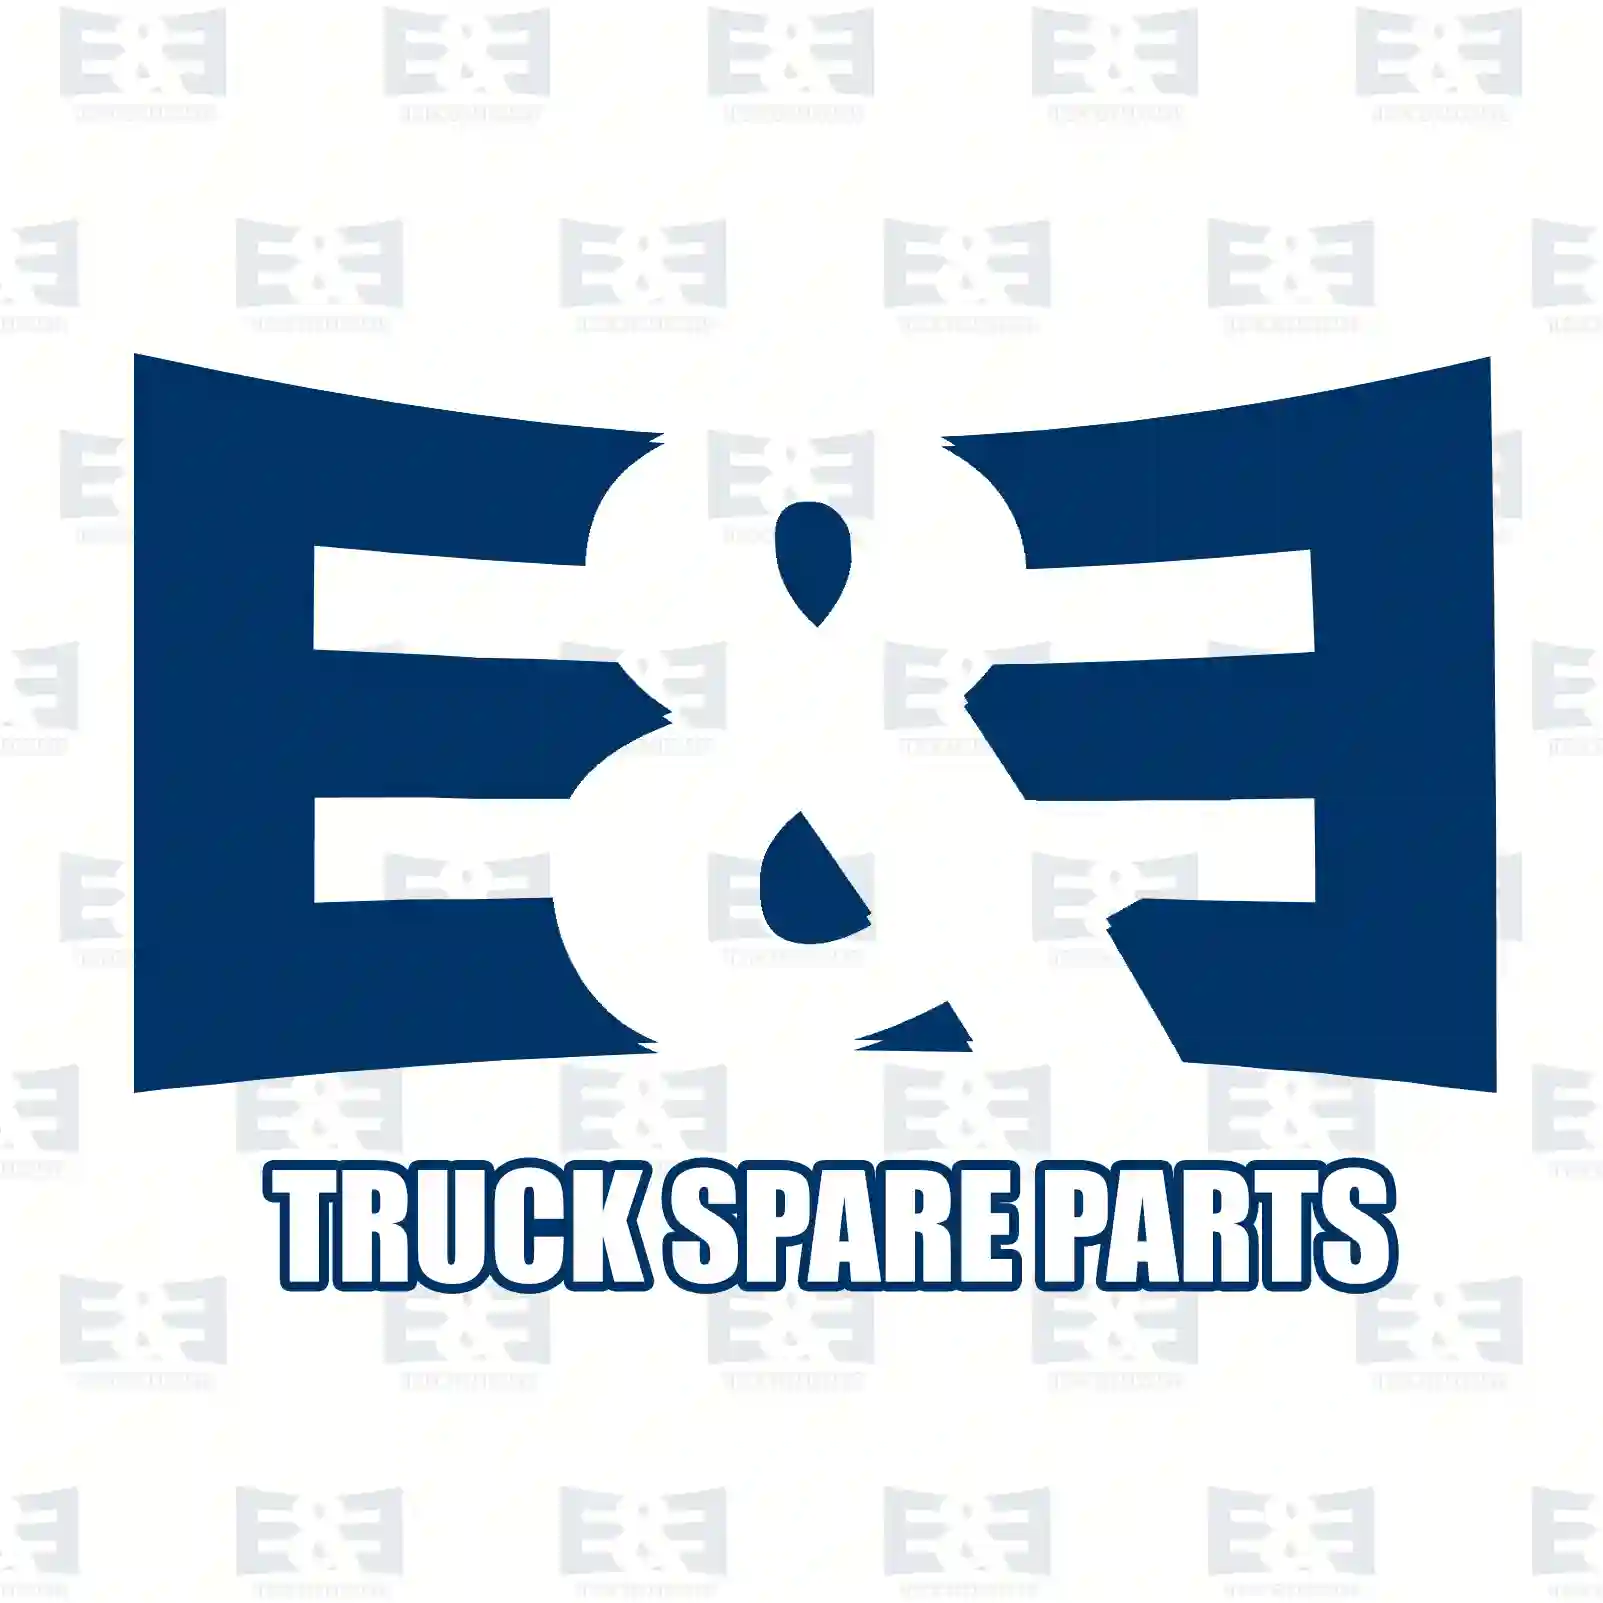  Tail lamp, right, prepared for reverse alarm || E&E Truck Spare Parts | Truck Spare Parts, Auotomotive Spare Parts